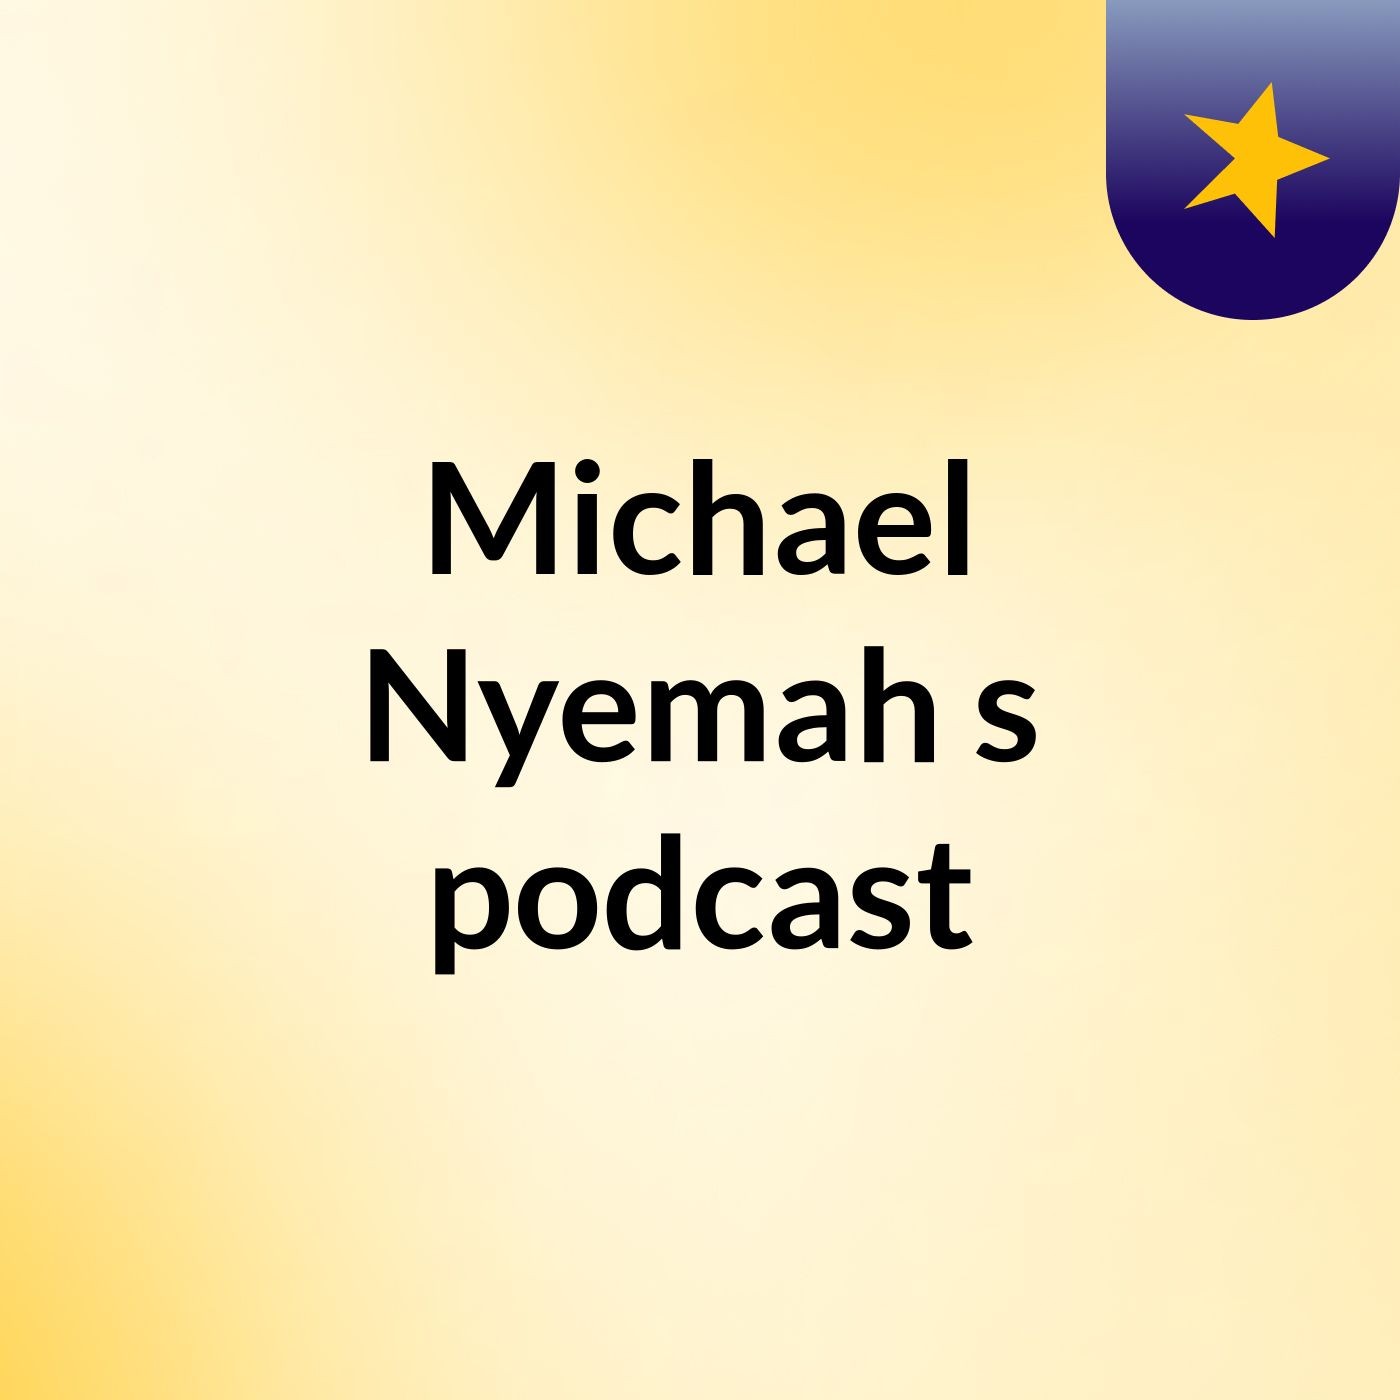 Michael Nyemah's podcast